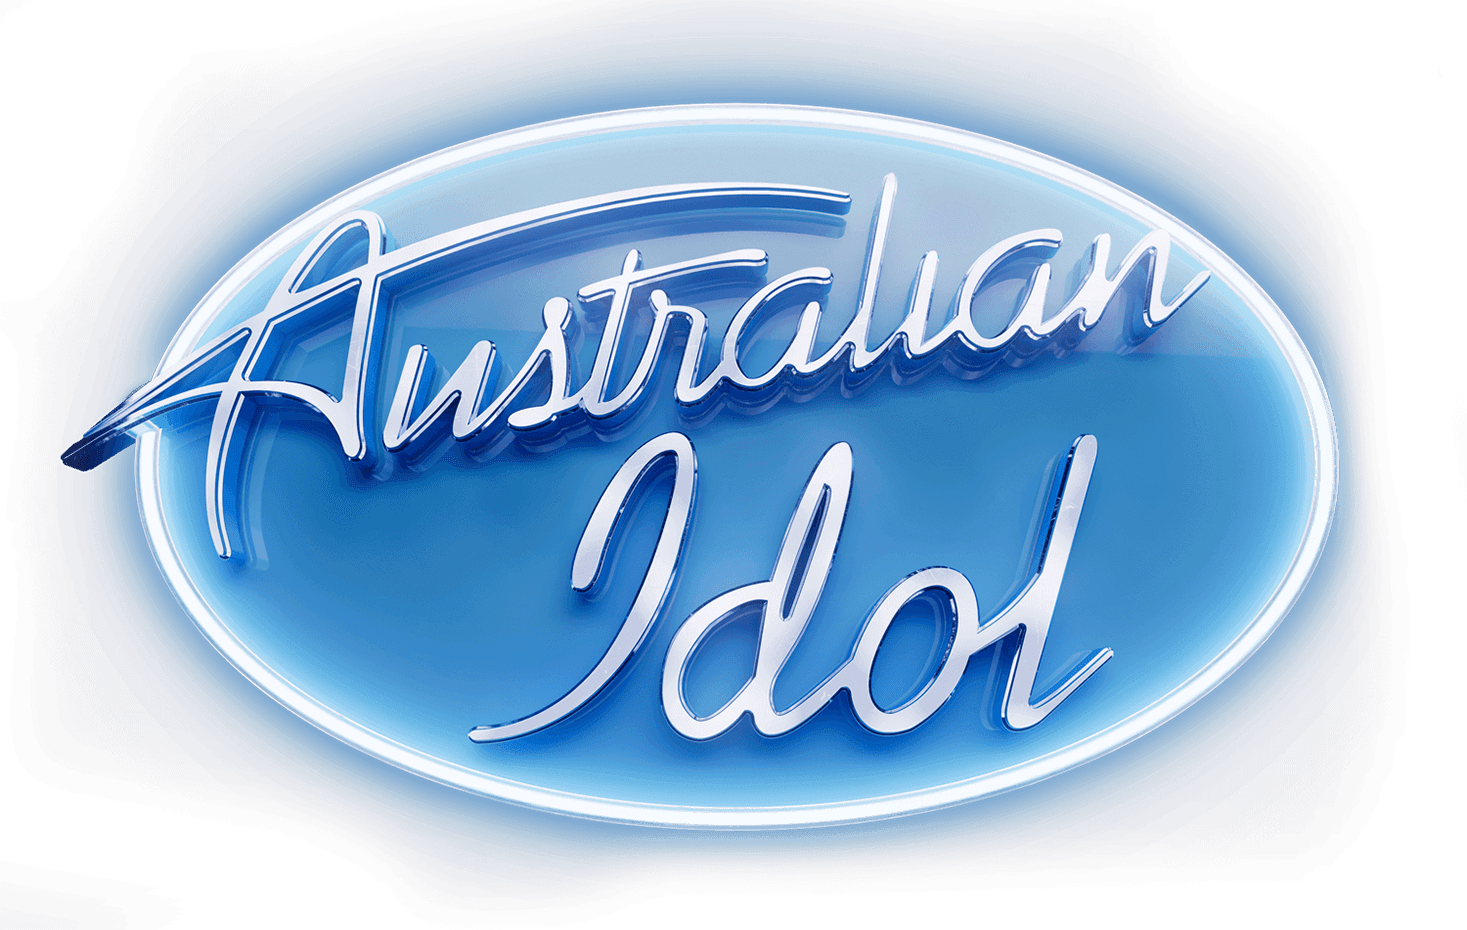 Australian Idol logo